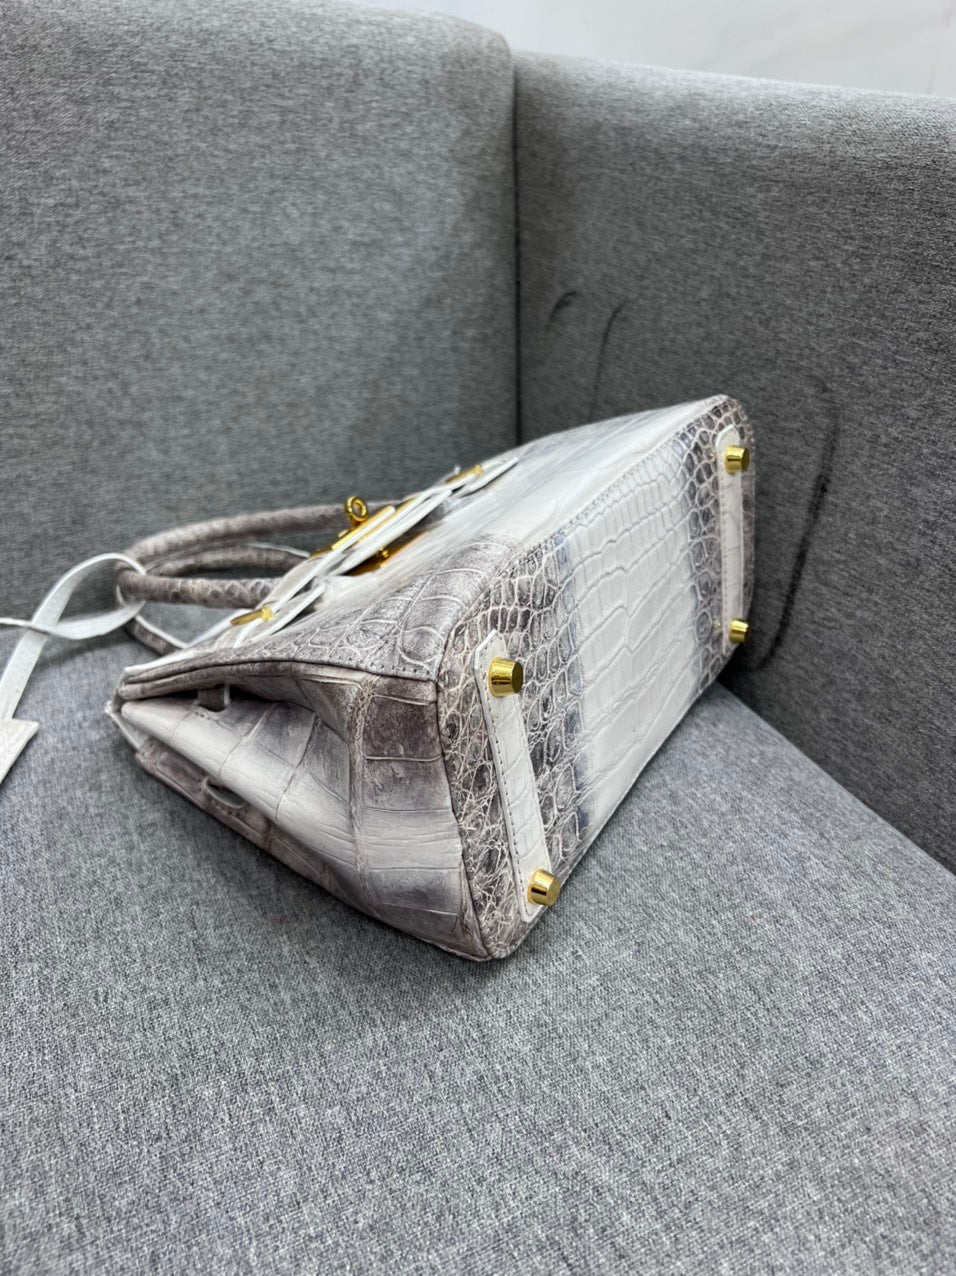 Authentic Croc Leather Women Handbag Bag Cross body White Himalayan w/Strap  New